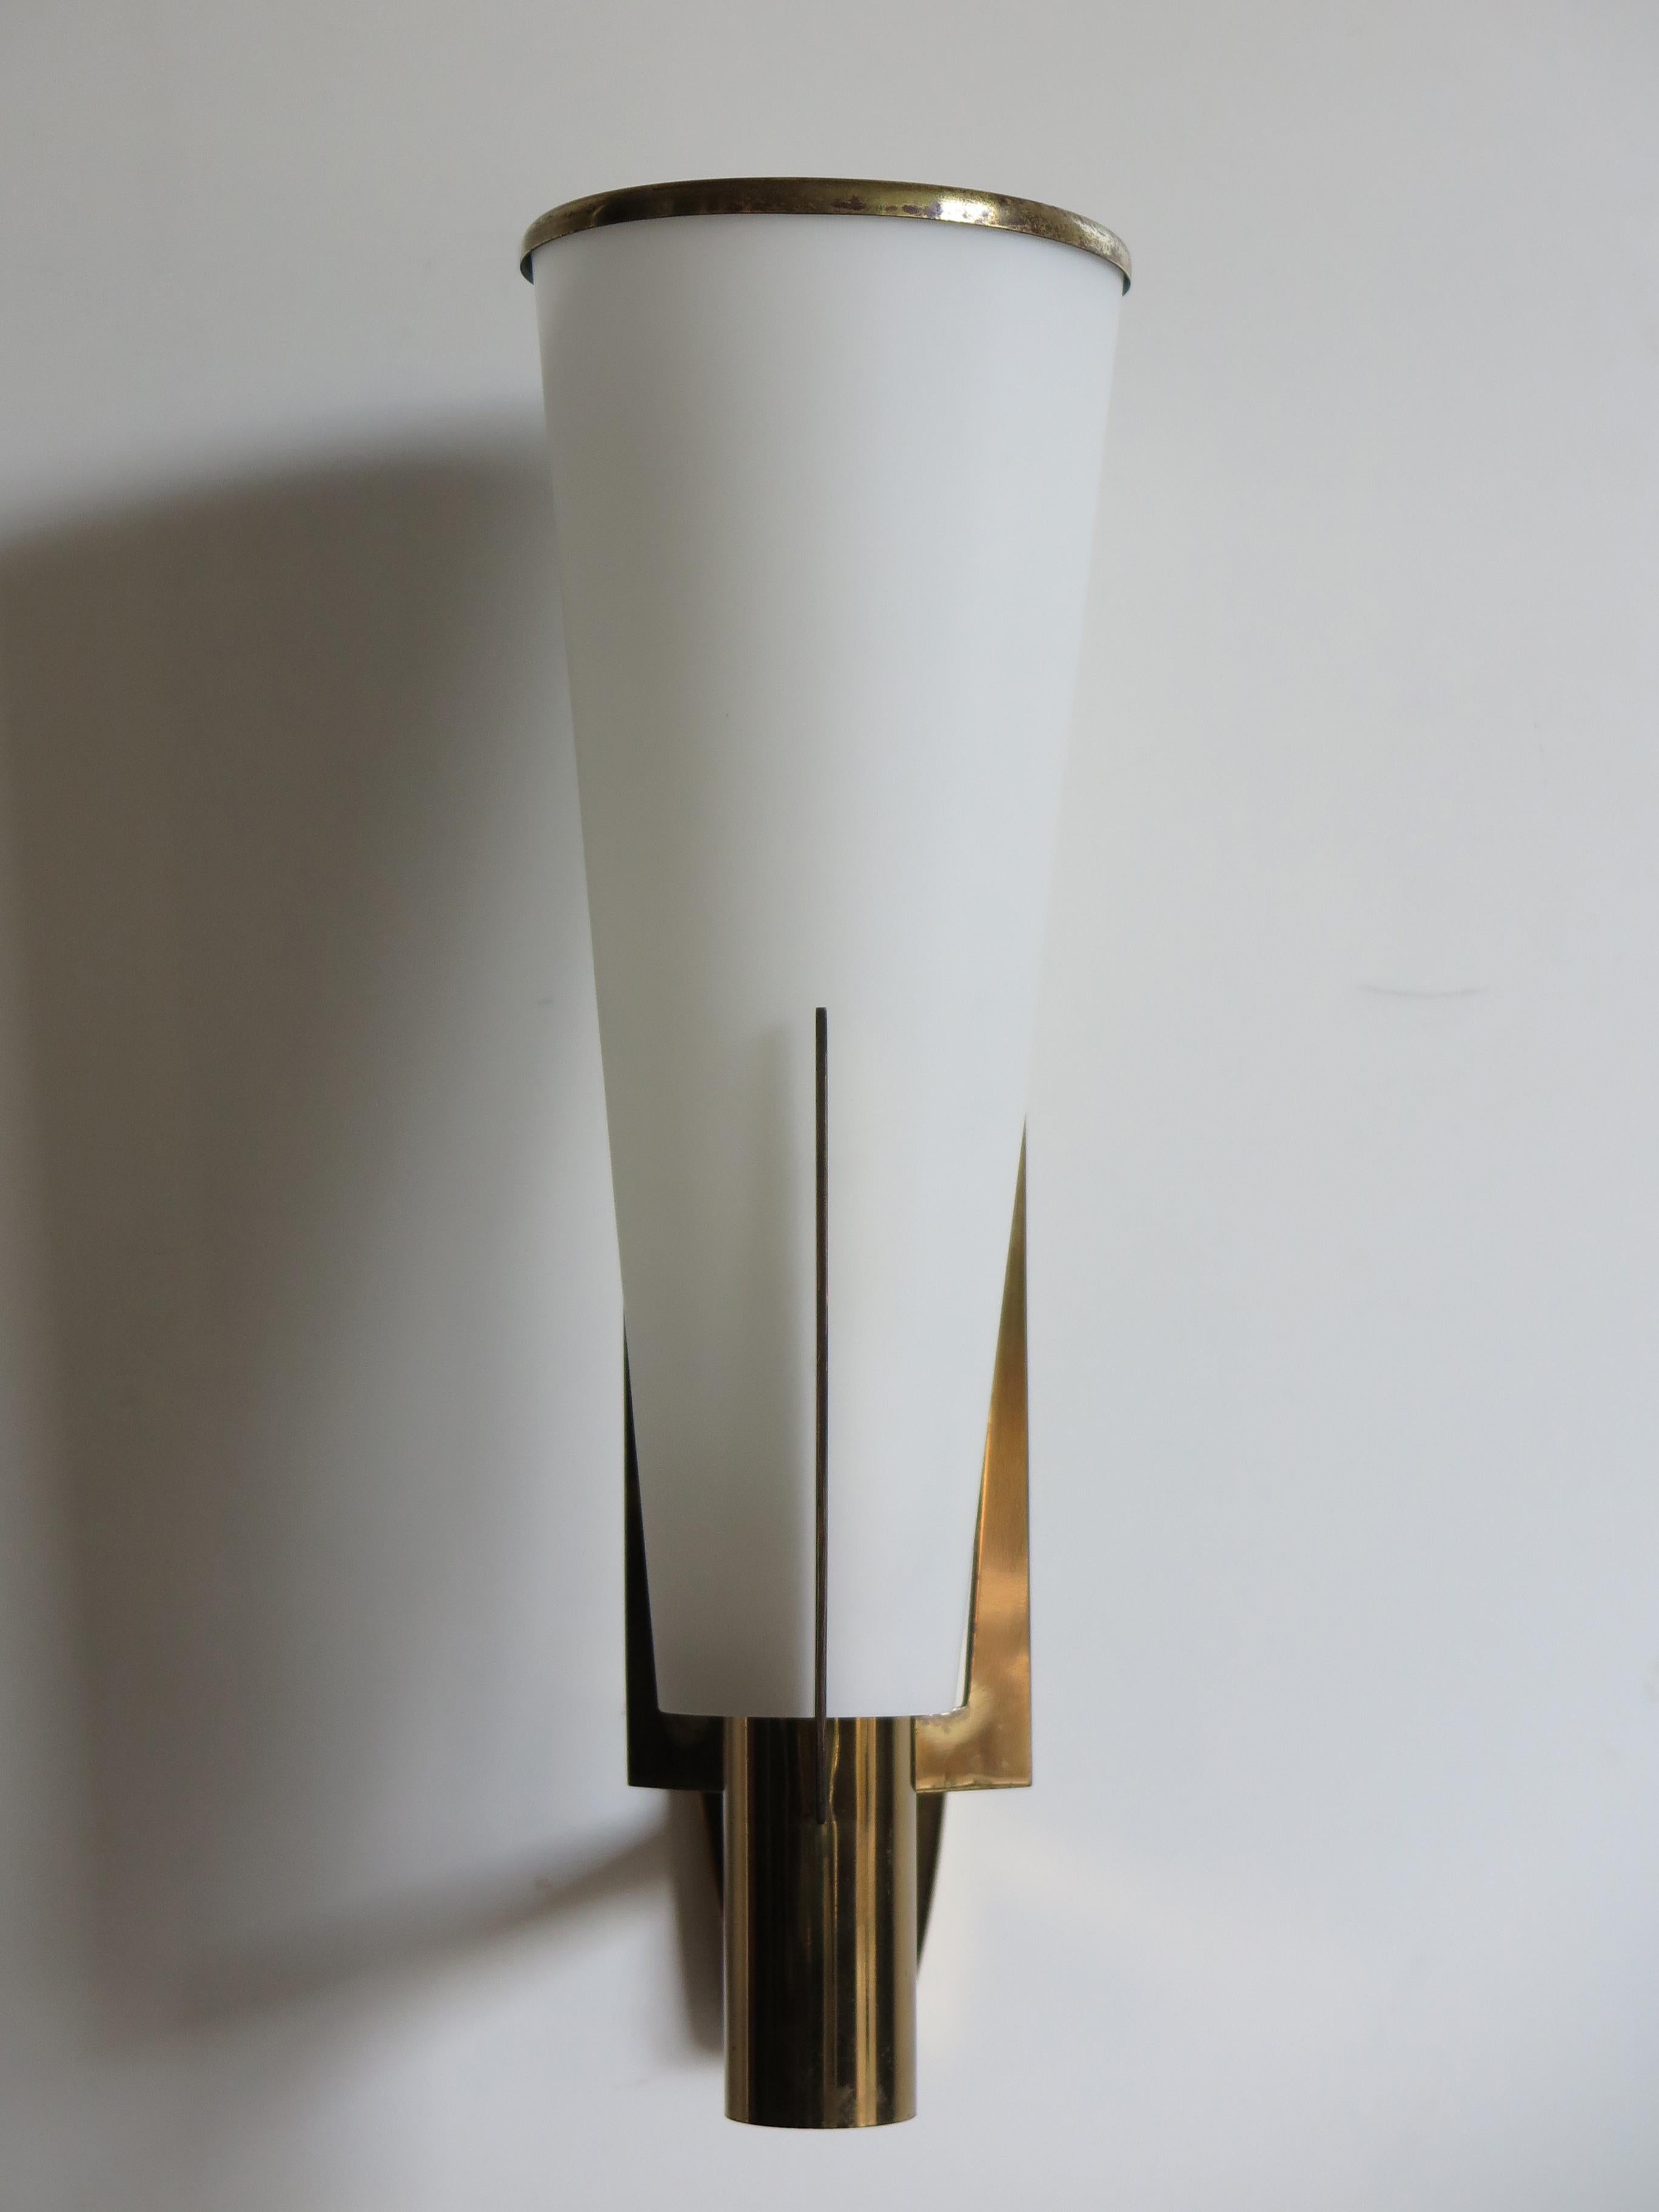 Italian Stilnovo Brass Glass Midcentury Sconce Wall Lamp, 1950s In Good Condition For Sale In Reggio Emilia, IT